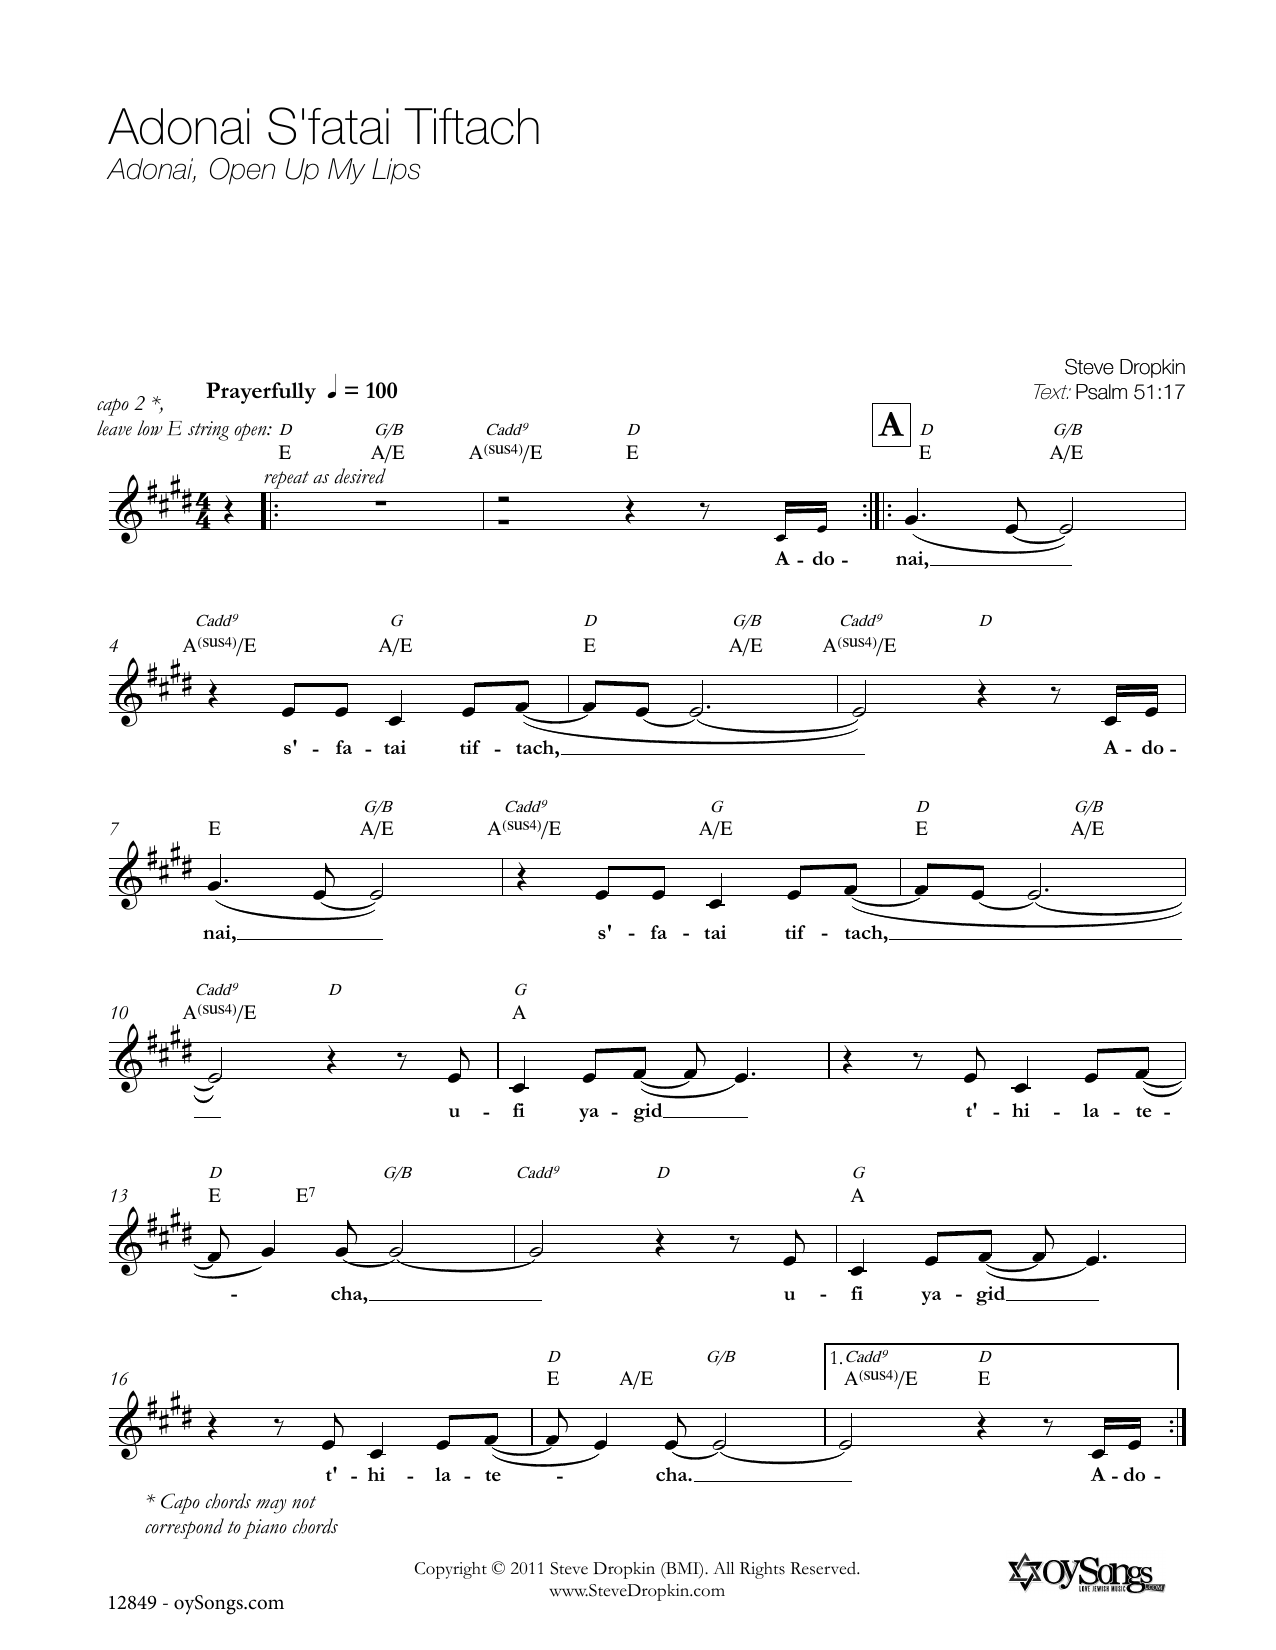 Steve Dropkin Adonai S'fatai Tiftach Sheet Music Notes & Chords for Melody Line, Lyrics & Chords - Download or Print PDF